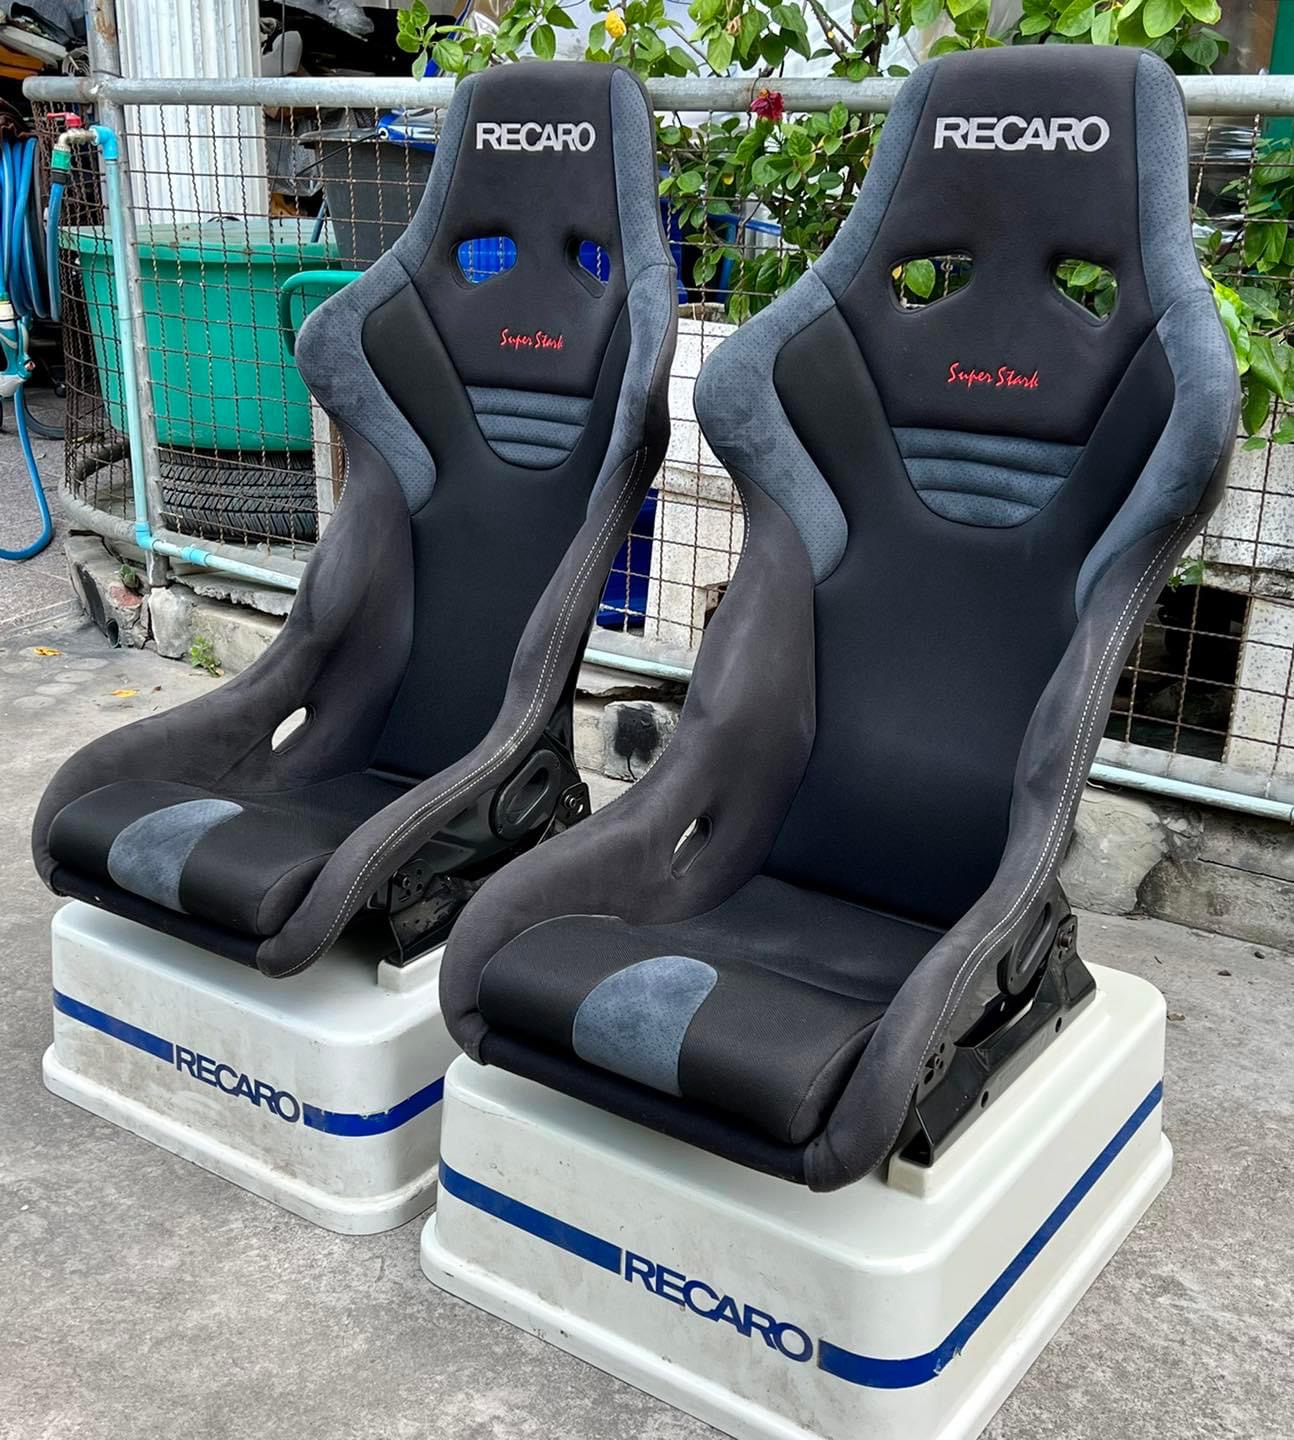 Recaro Rs G Superstark Bucket Seats For Racing And Gaming